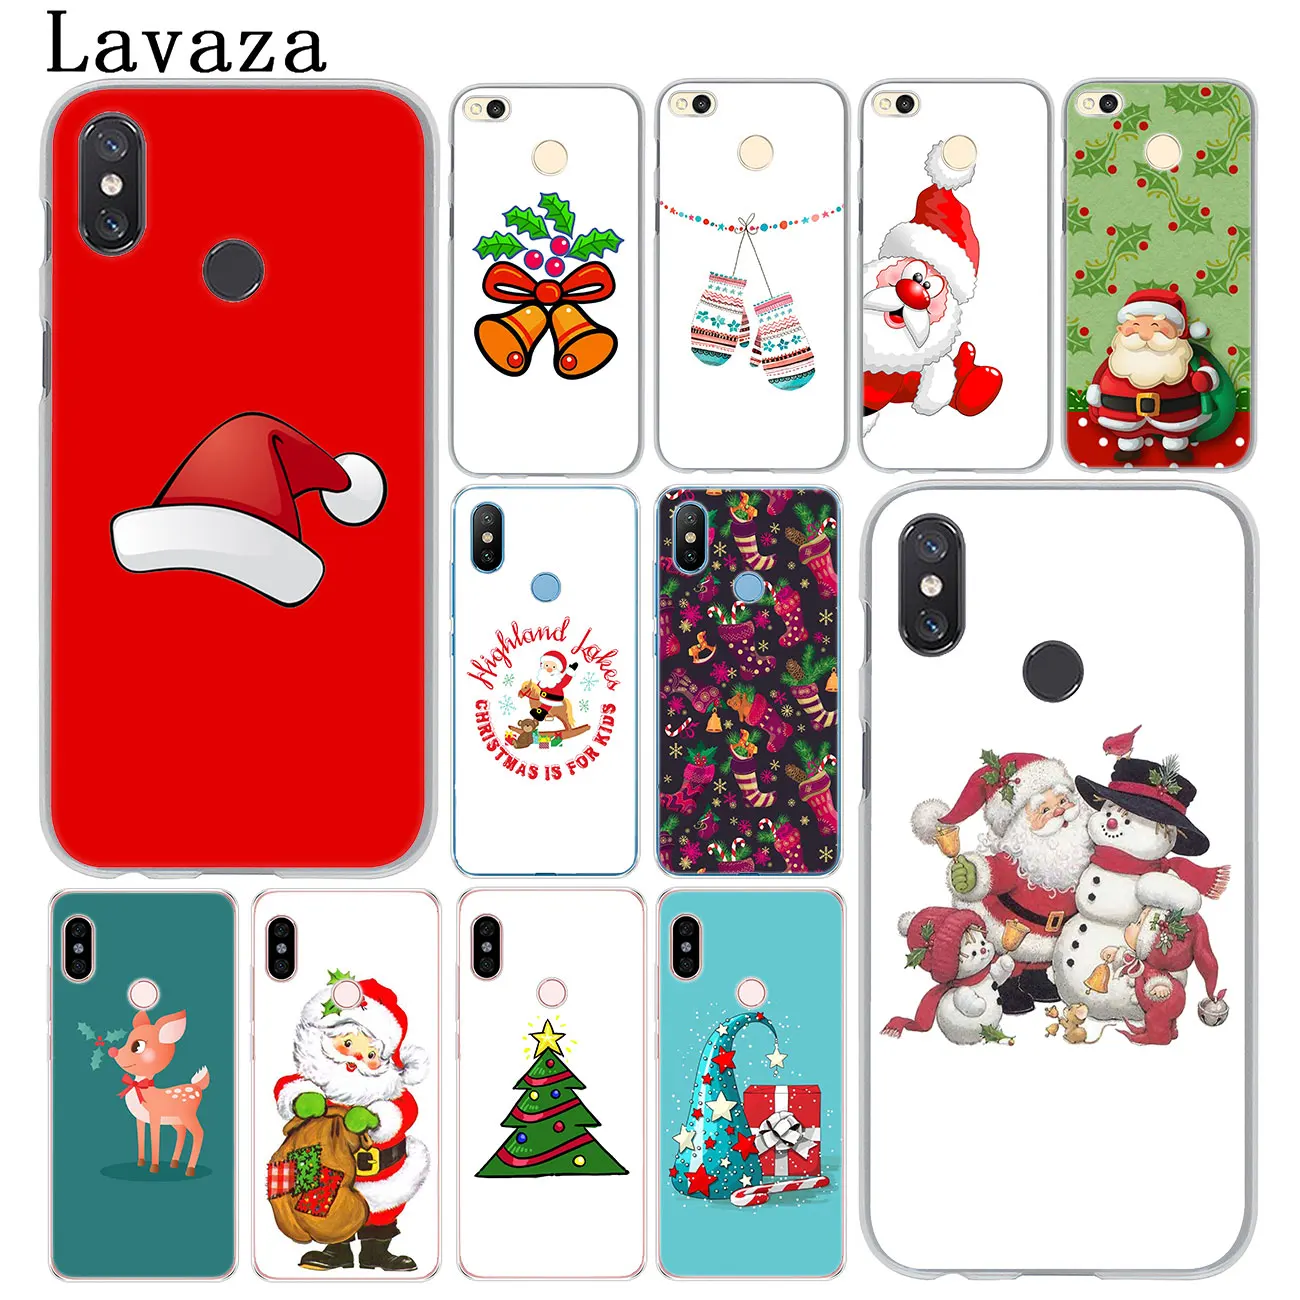 

Lavaza Merry Christmas new Year donut gift Phone Case for Xiaomi MI 9 9T CC9 CC9E A3 Pro 8 SE A2 Lite A1 pocophone f1 6X MAX 3